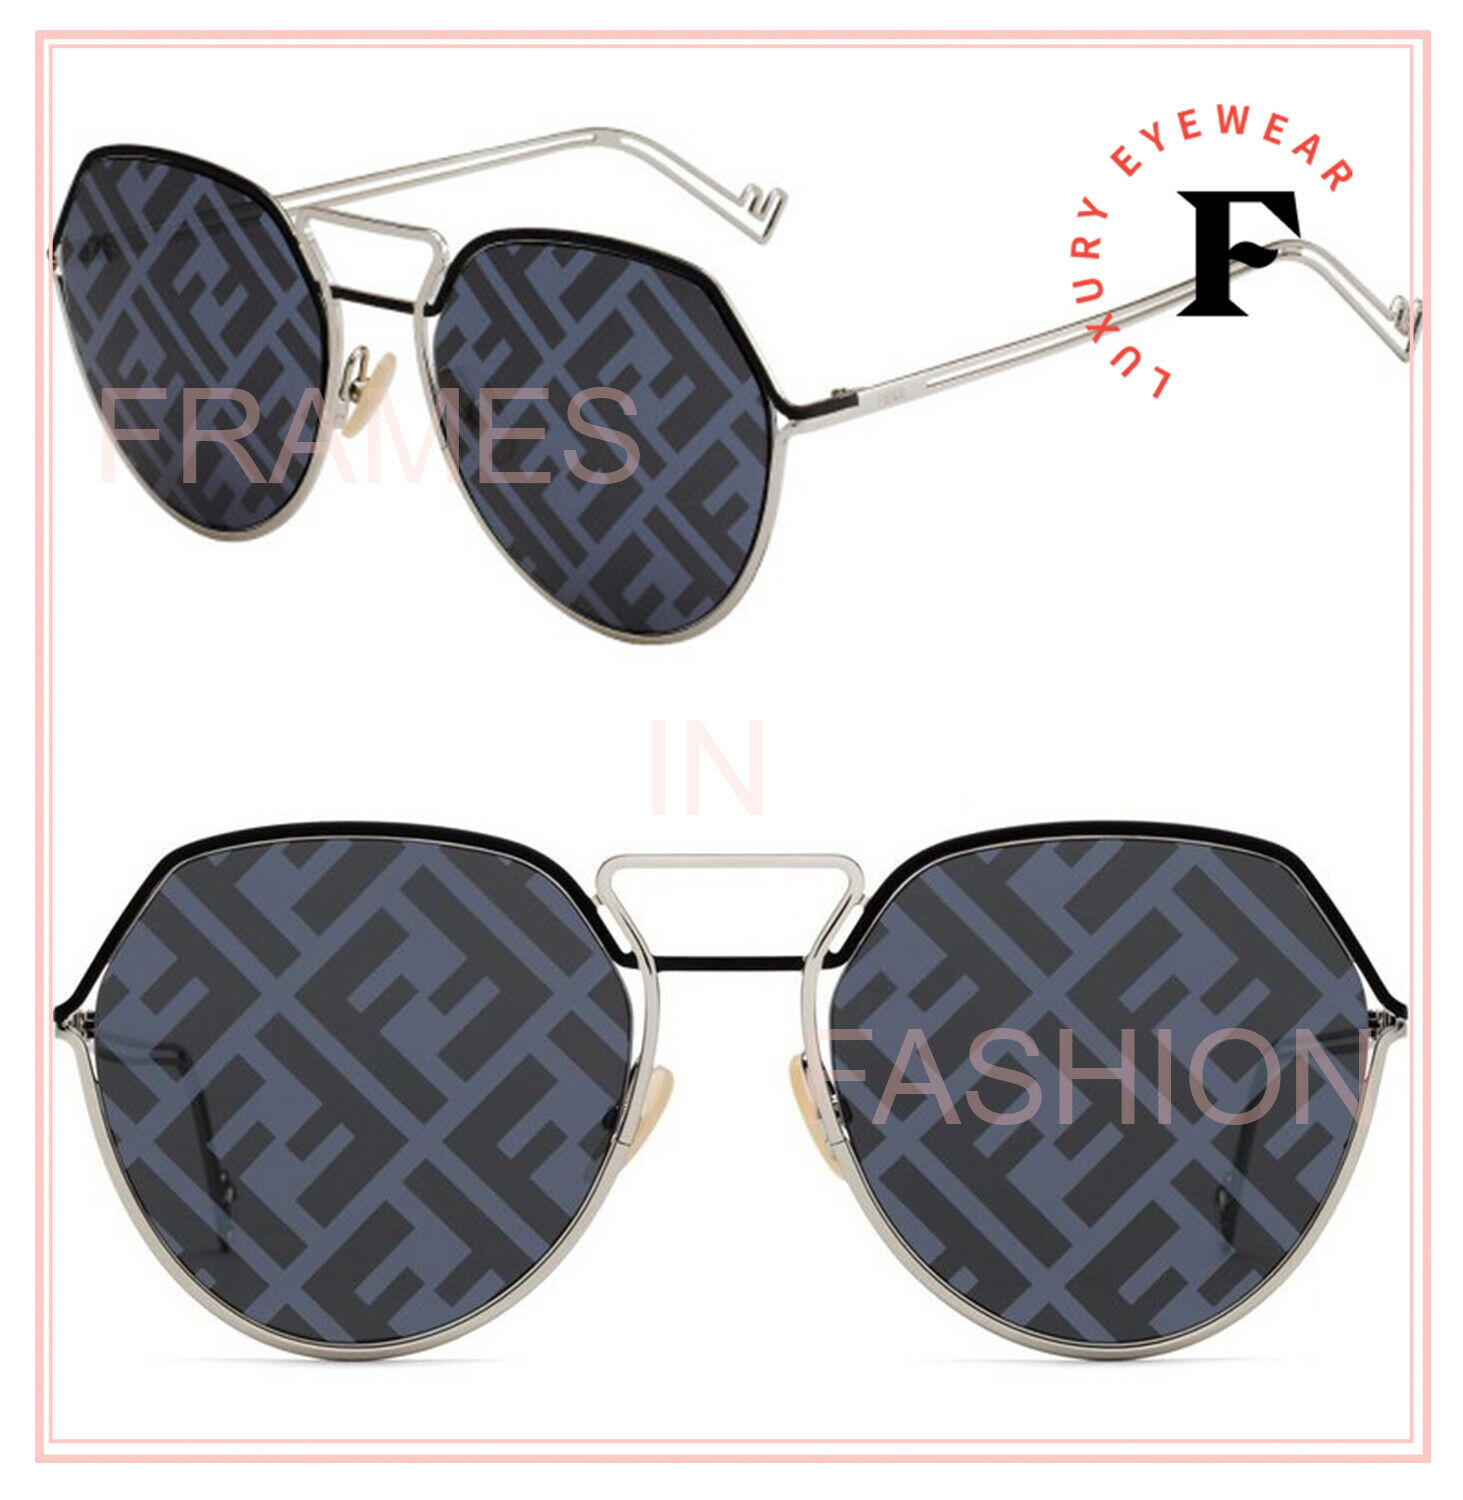 Fendi O'Lock - Palladium metal sunglasses with gray lenses and